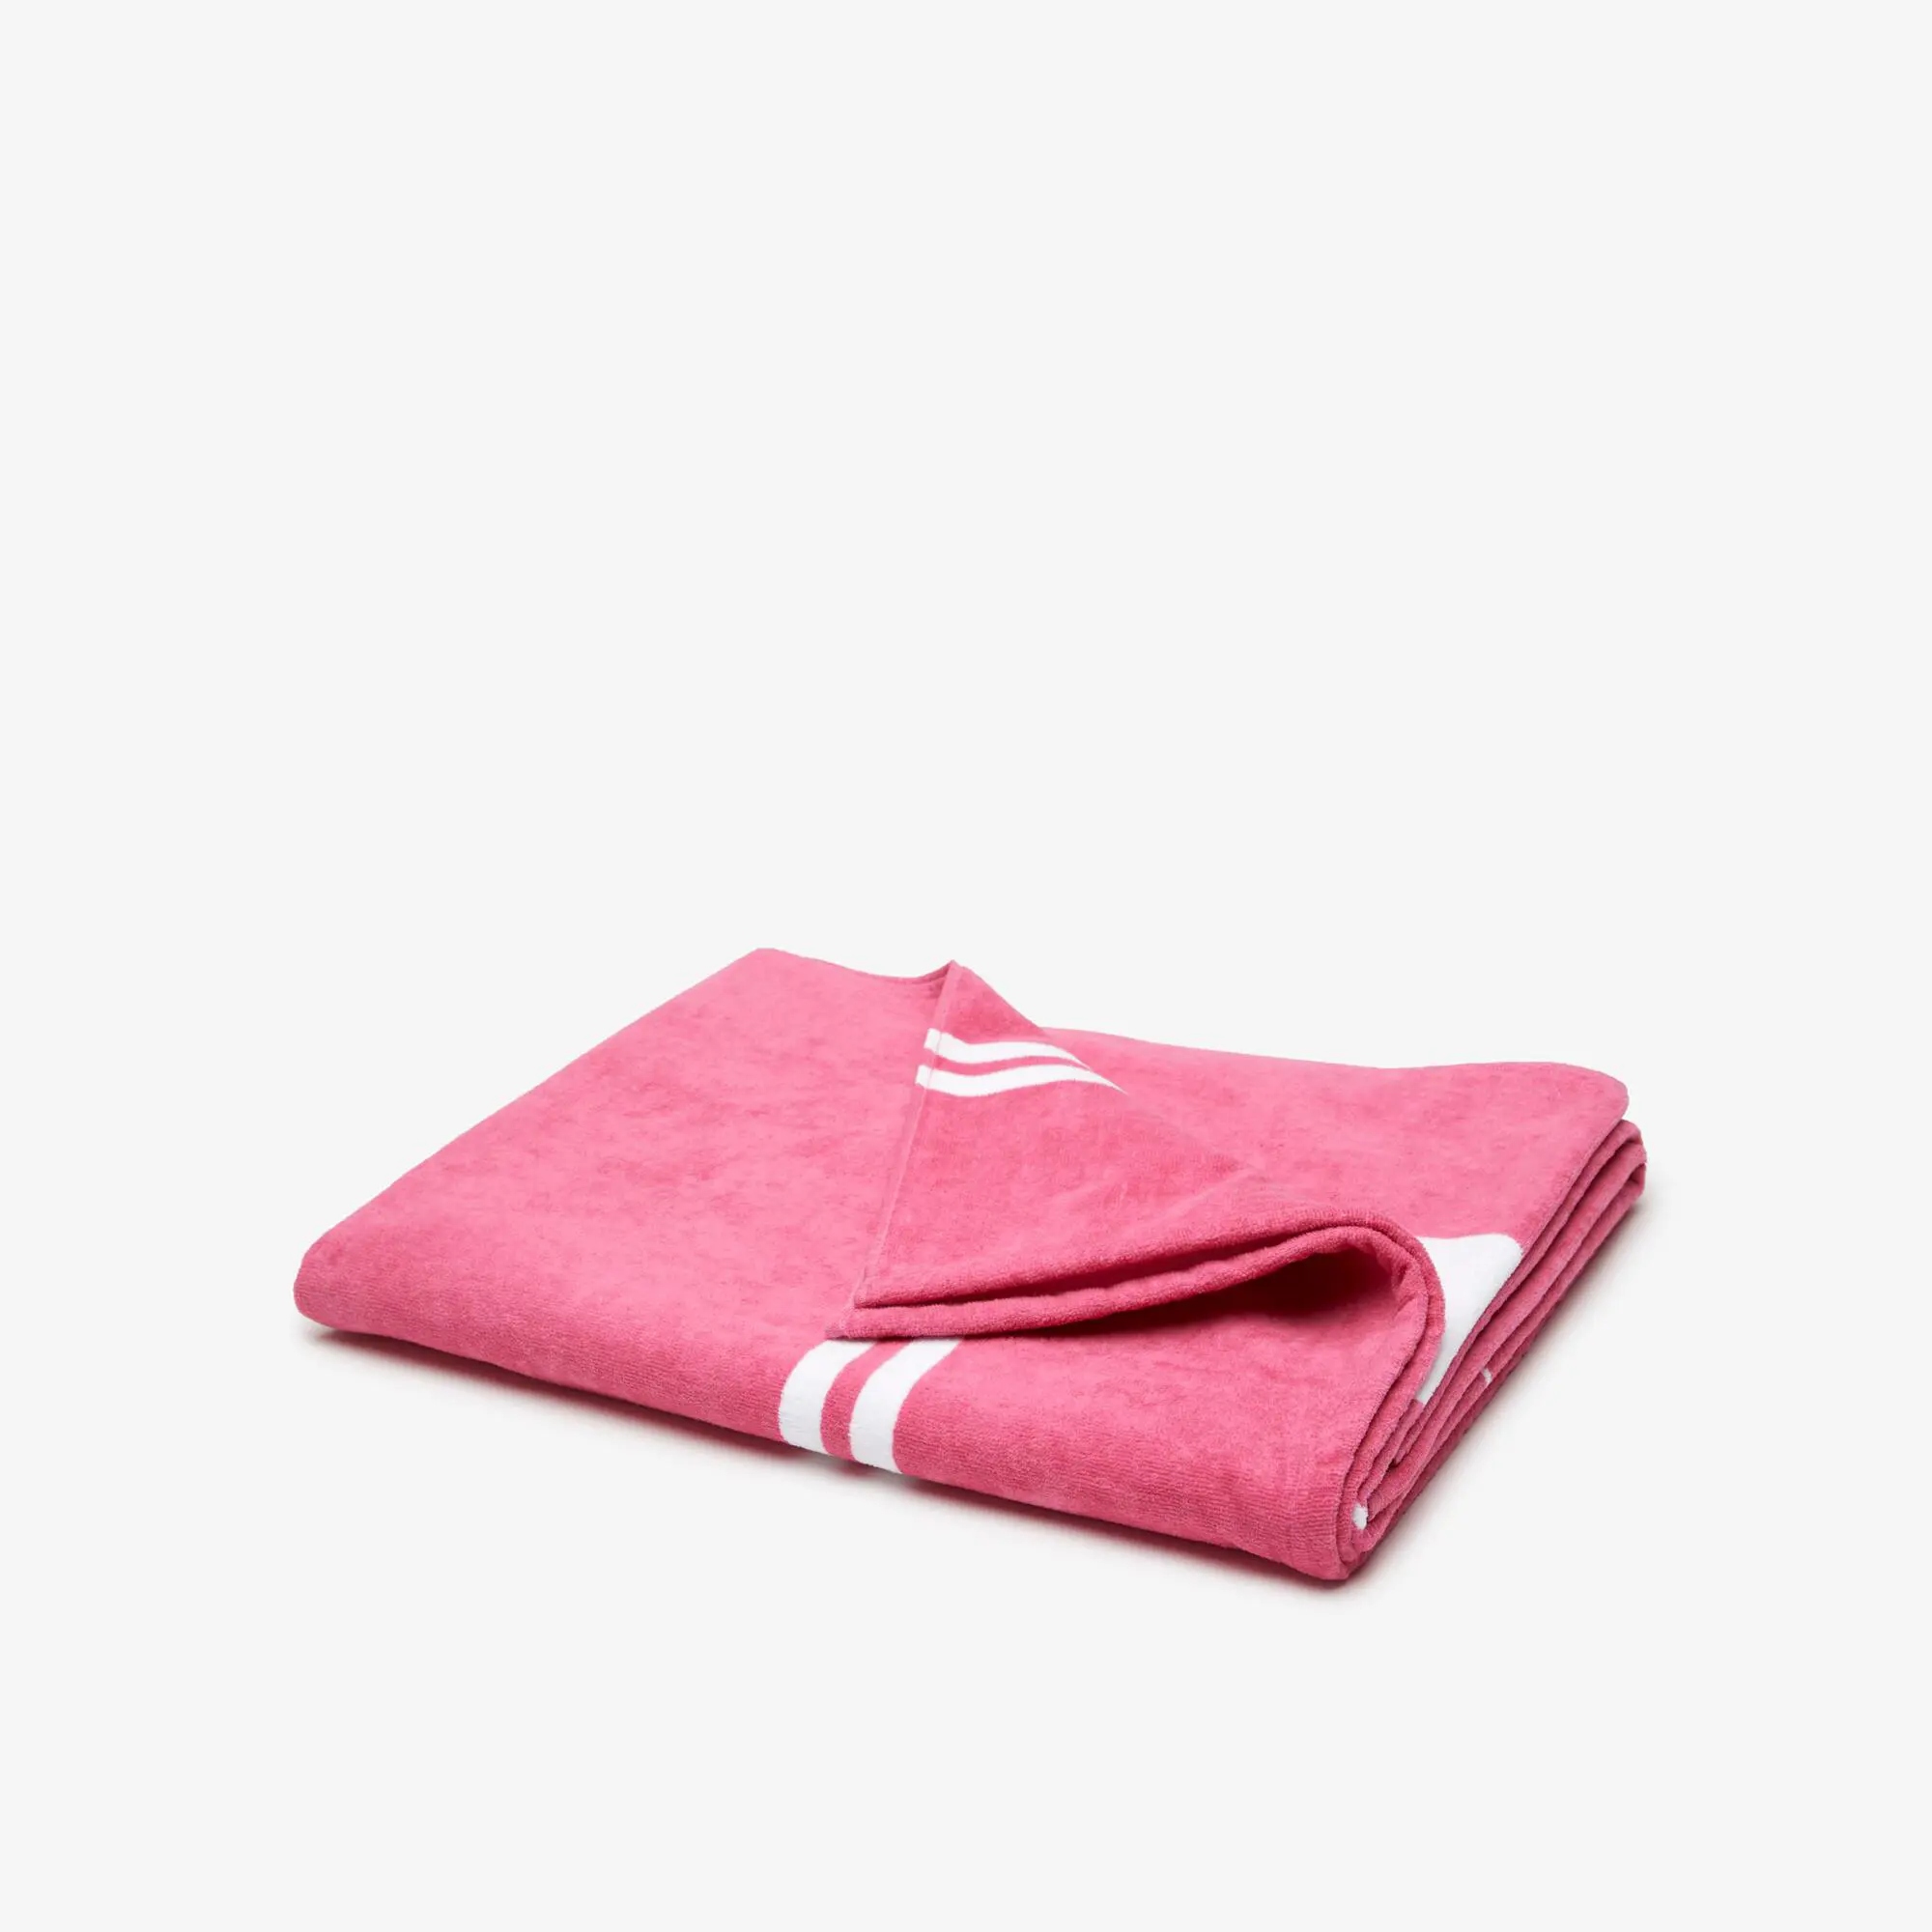 Lacoste Summer Pack Beach Towel. 2